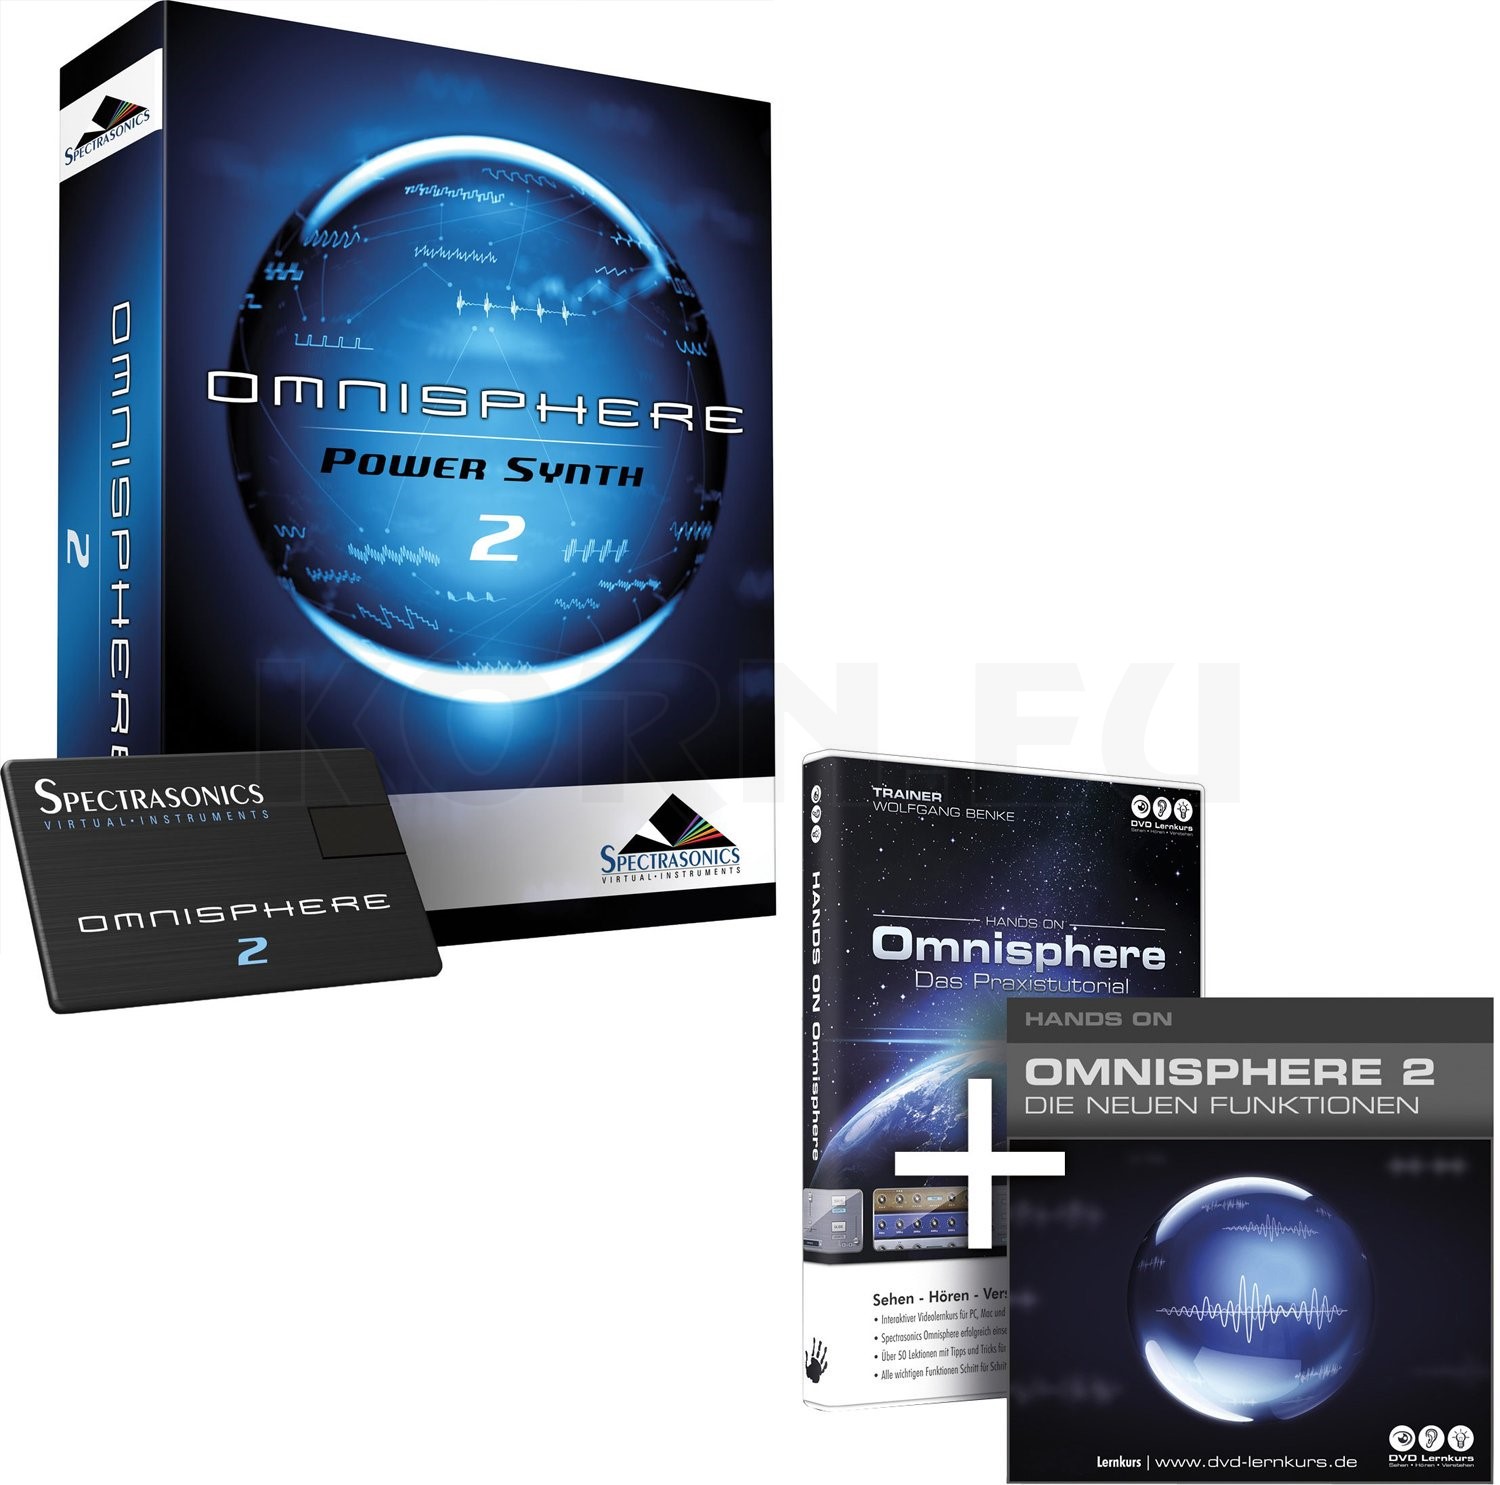 Spectrasonics omnisphere 2. 5 system requirements free